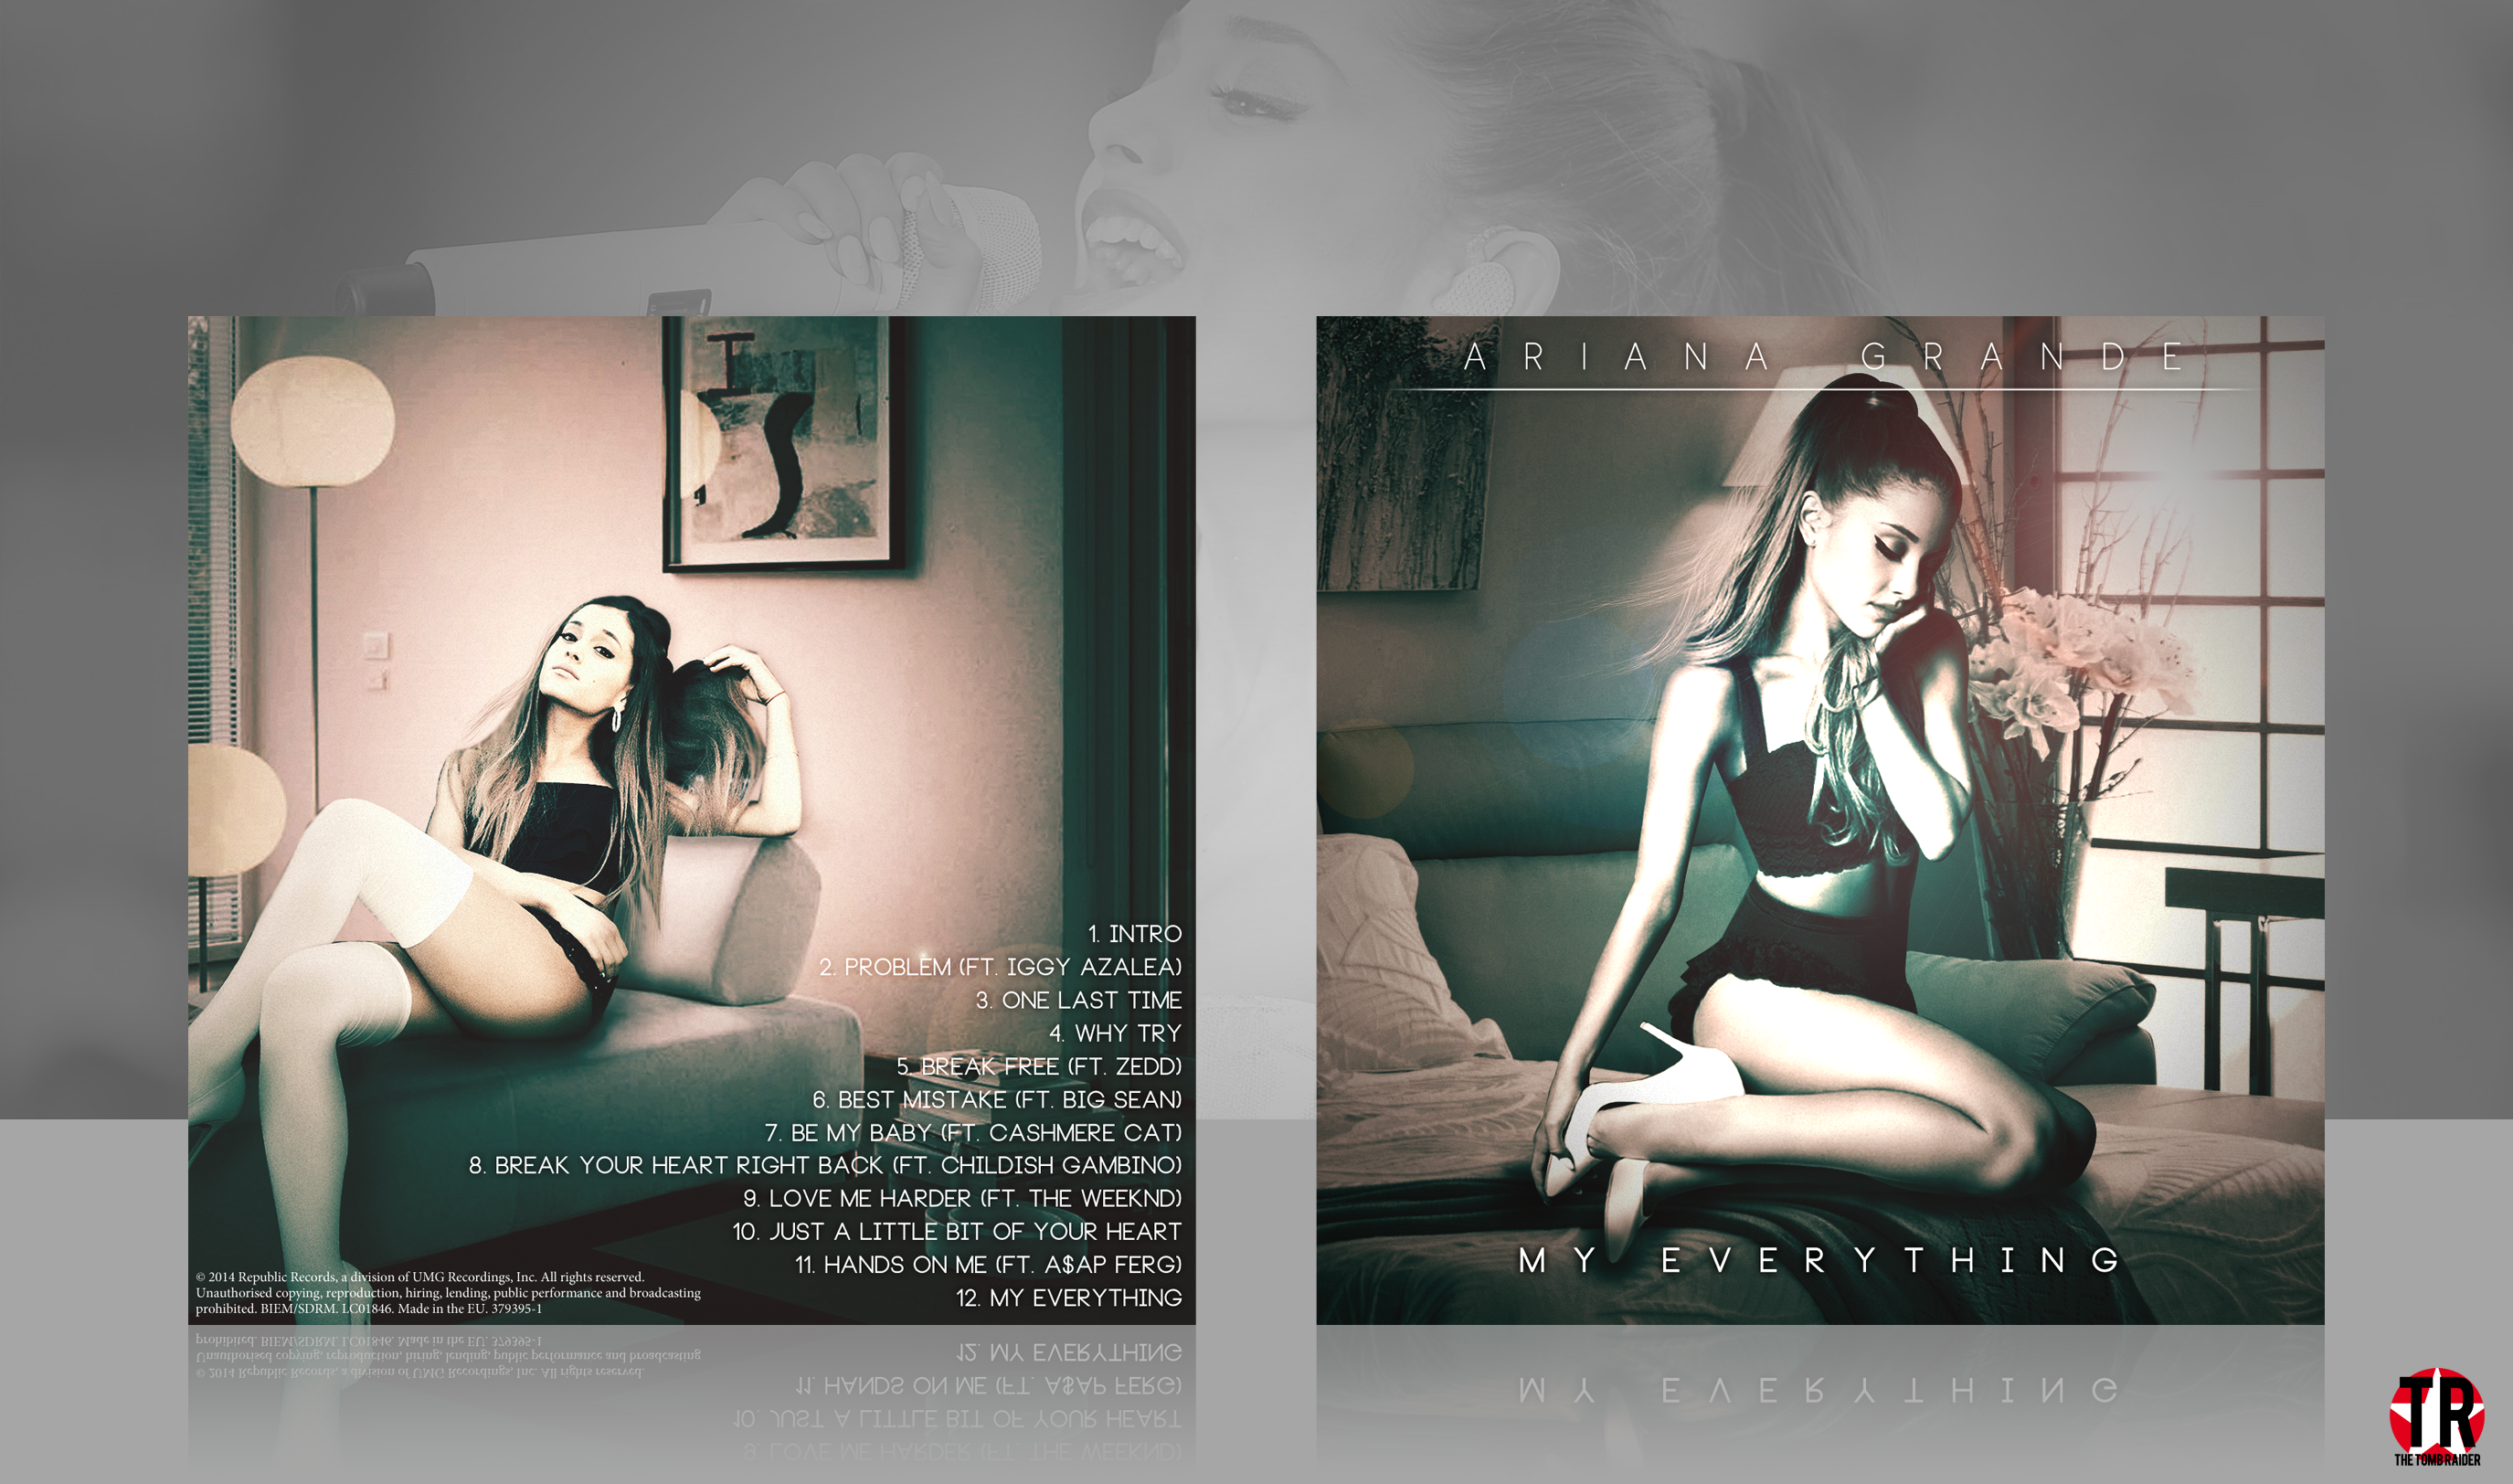 My Everything - Ariana Grande box cover